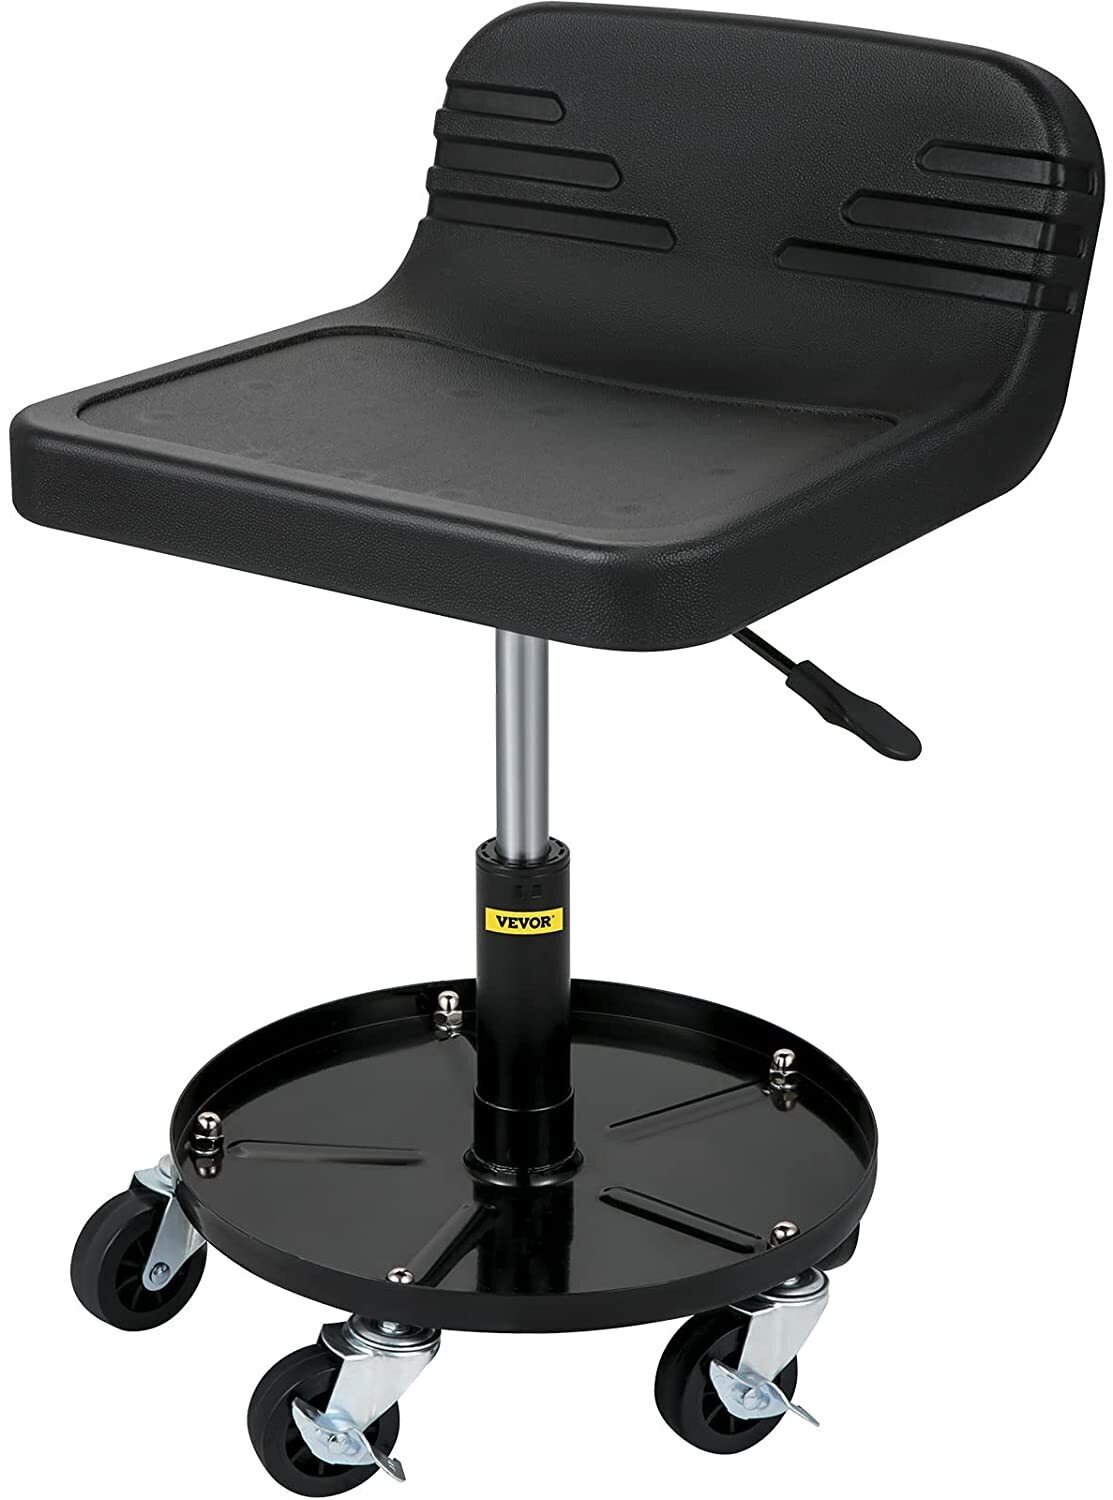 Adjustable garage bar stool with back